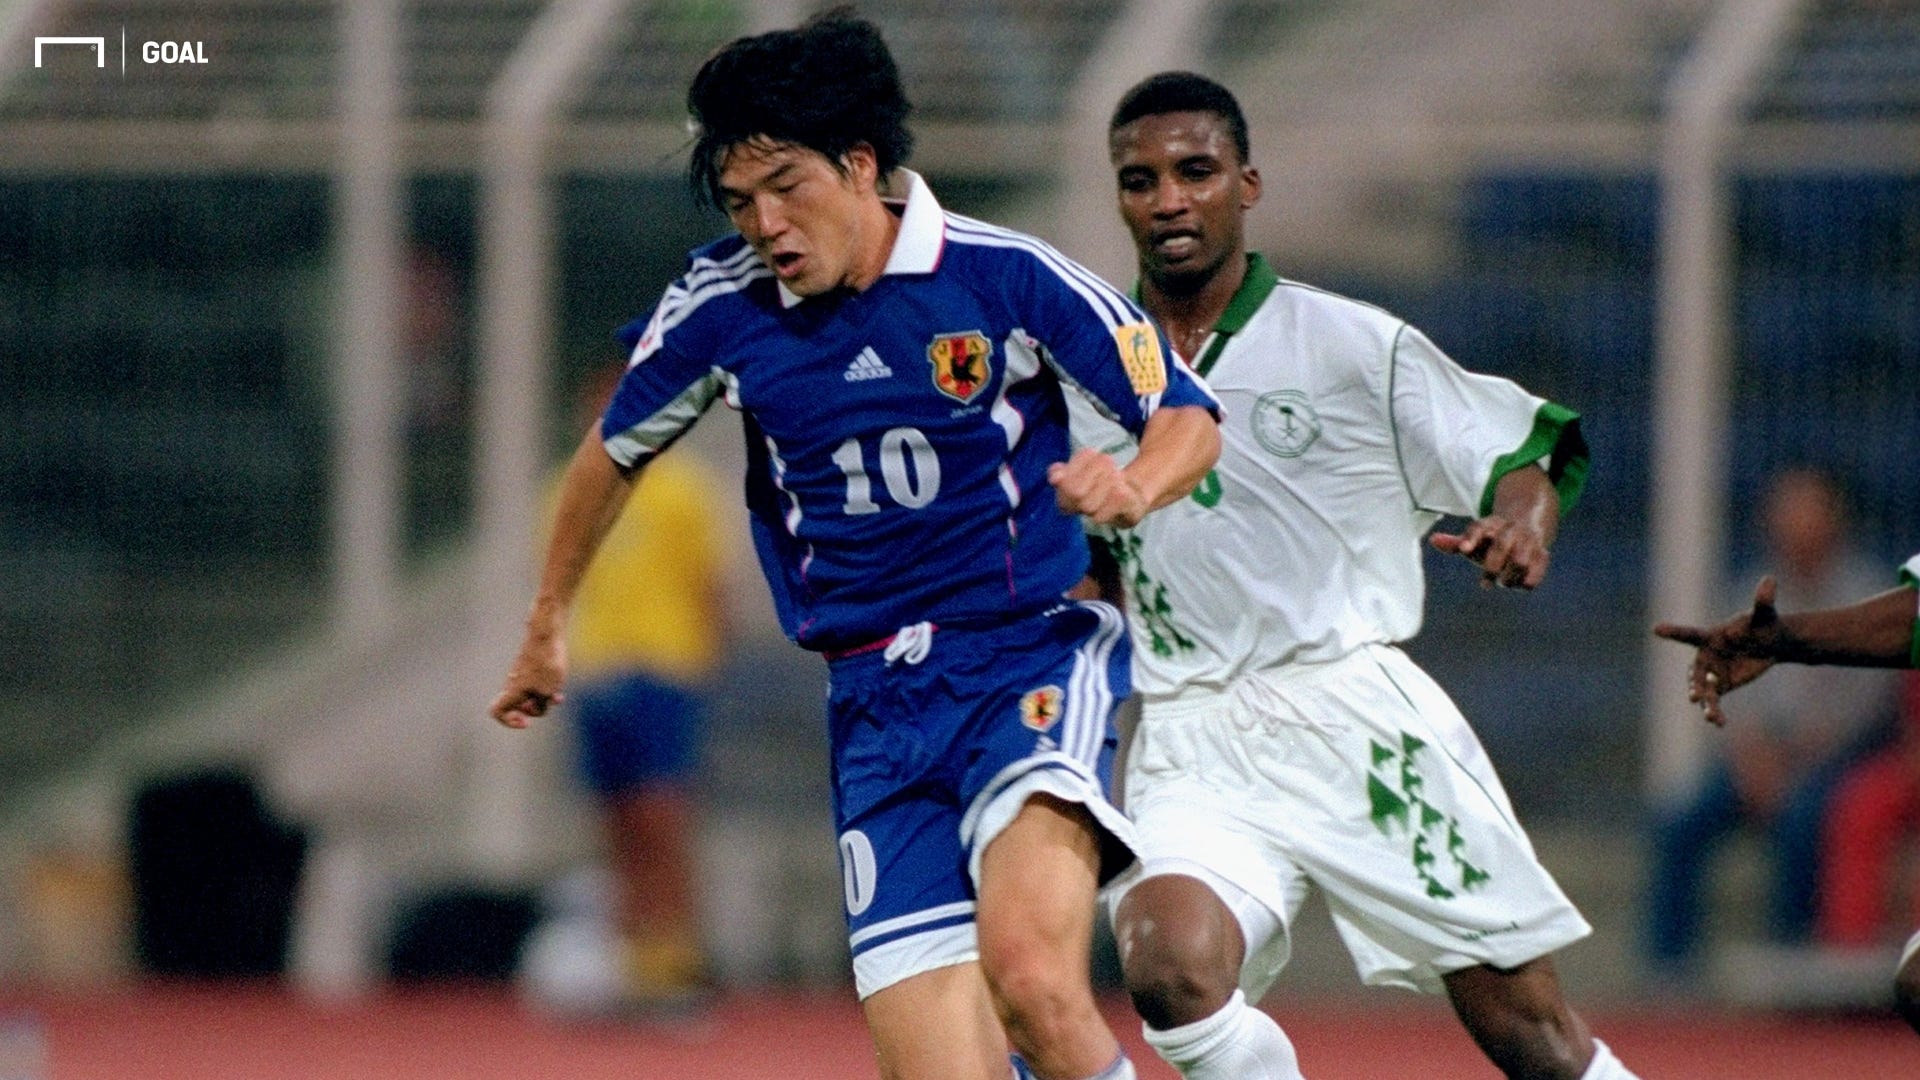 Afcアジアカップ開幕 日本代表 歴代の成績まとめ Goal Com 日本